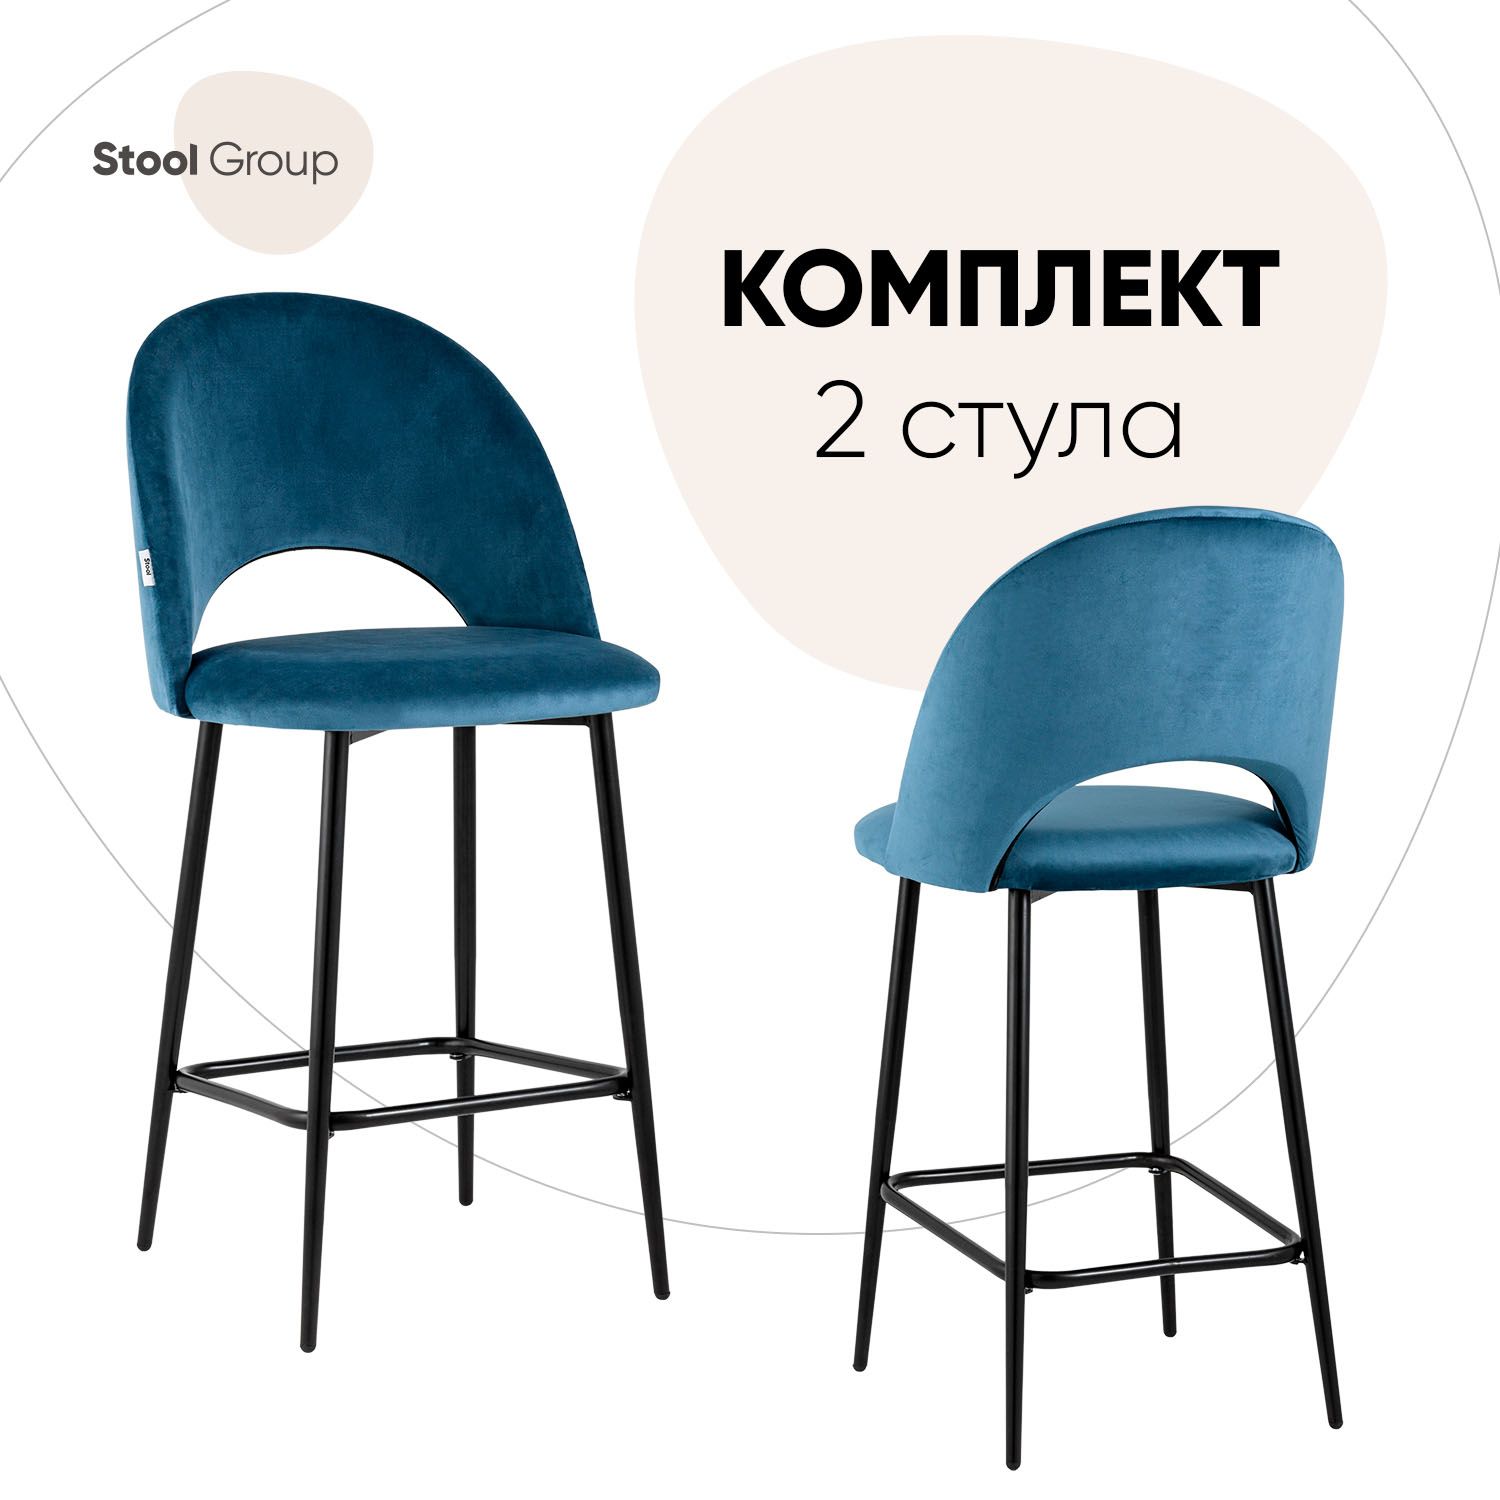 фото Стул полубарный stool group меган велюр пыльно-синий (комплект 2 стула)